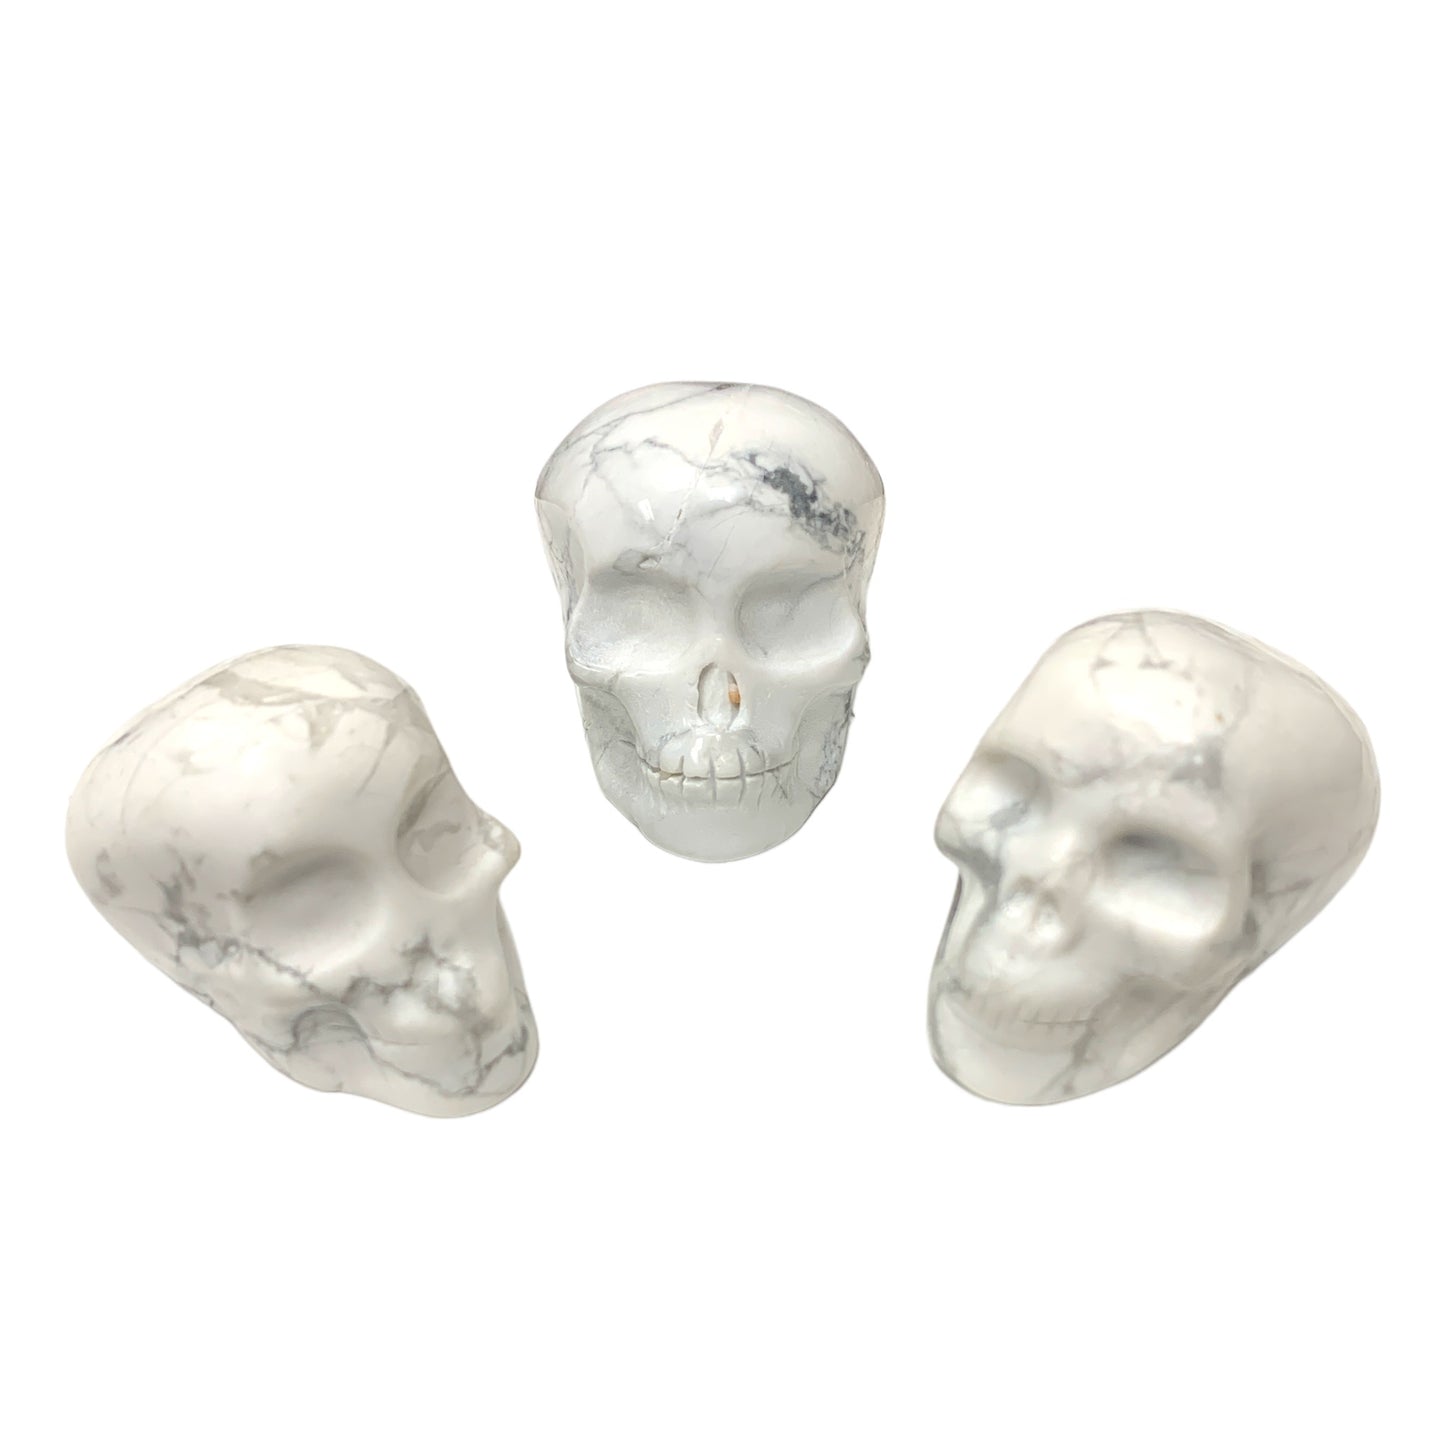 Skull - WHITE HOWLITE - Extra Small 30Hx40Lx28mm wide - China - NEW722